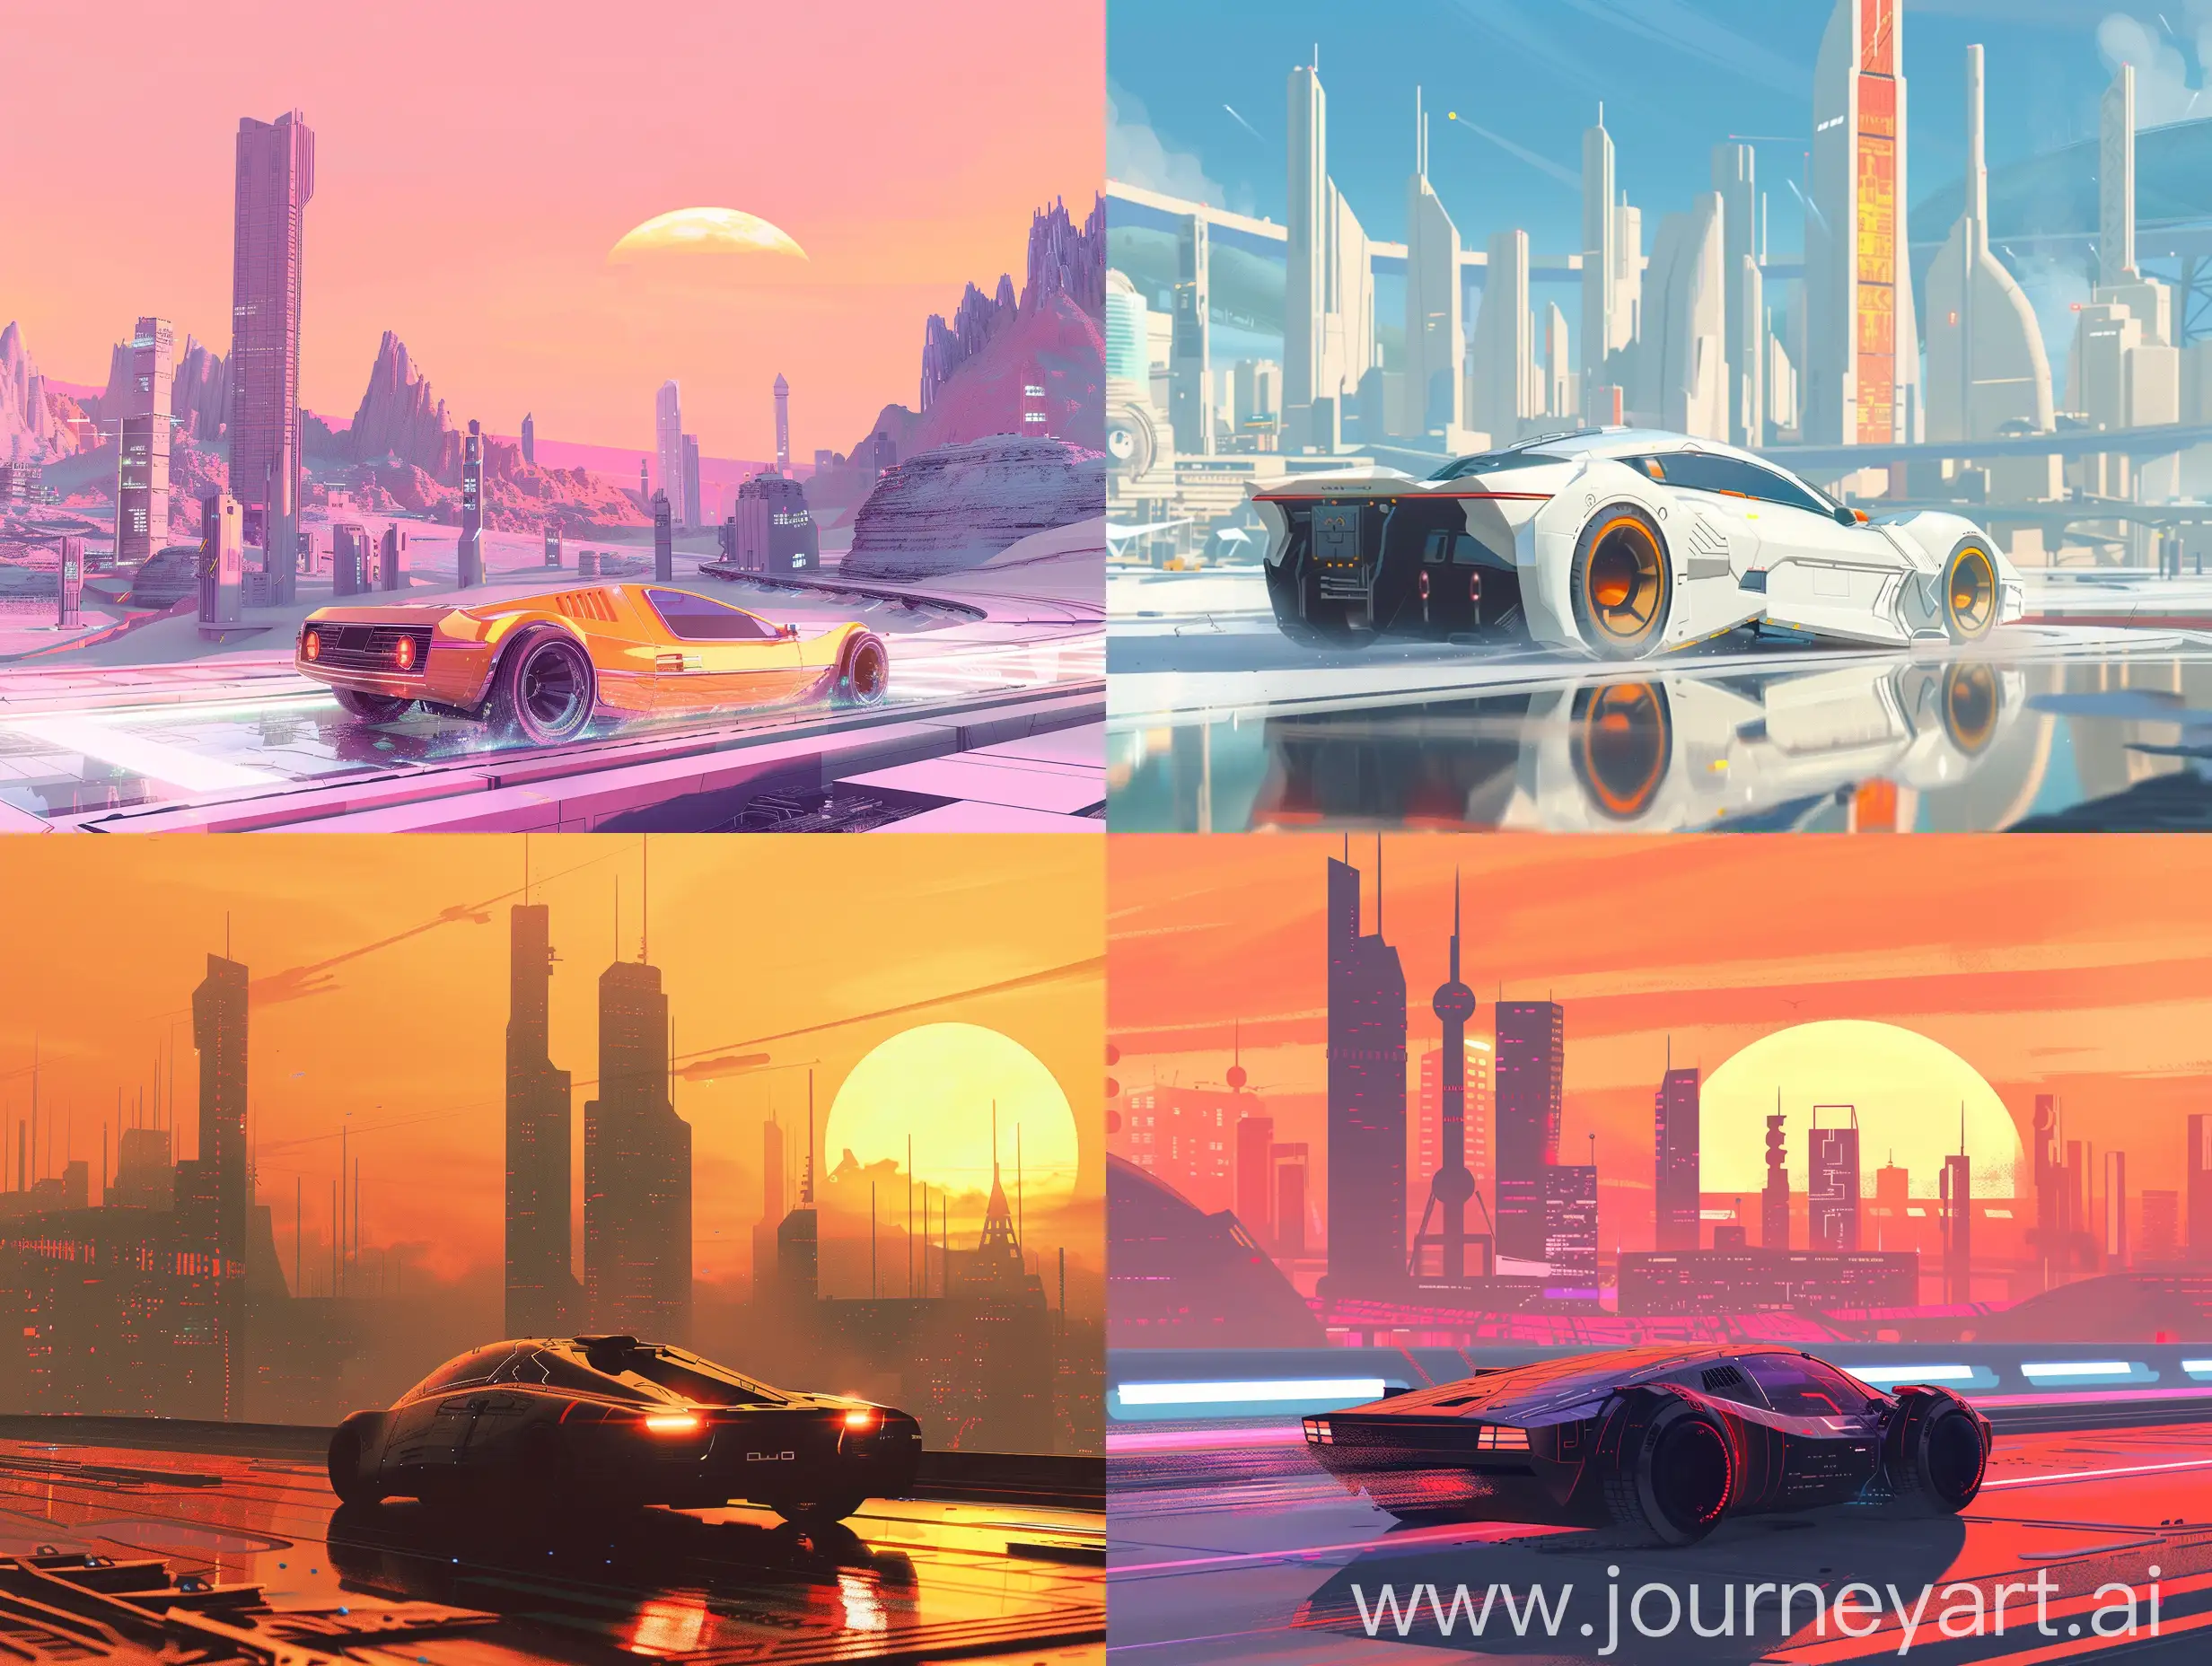 Solarpunk-Car-Driving-in-Utopian-Cityscape